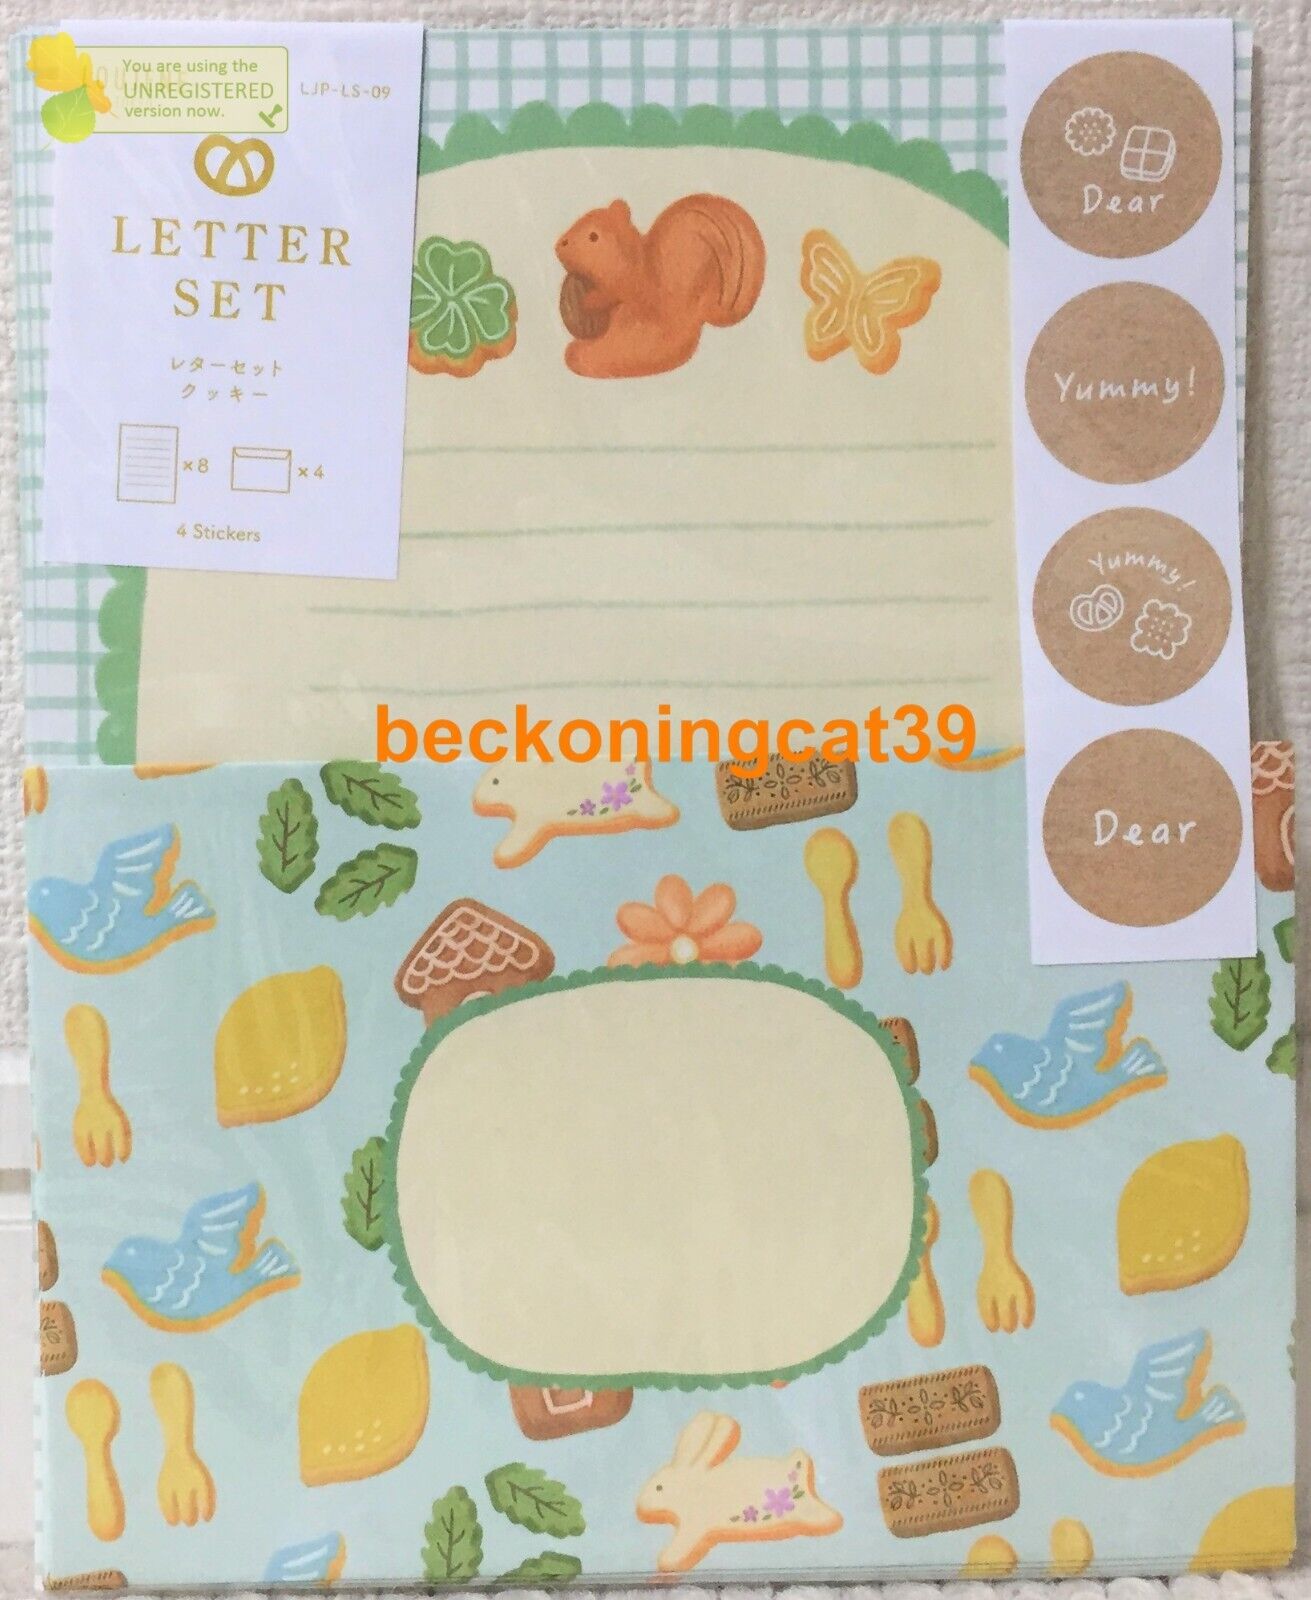 LAST LOUJENE Tokyo Animal Cookie Letter 8 Envelope 4 Sticker SET Squirrel JAPAN